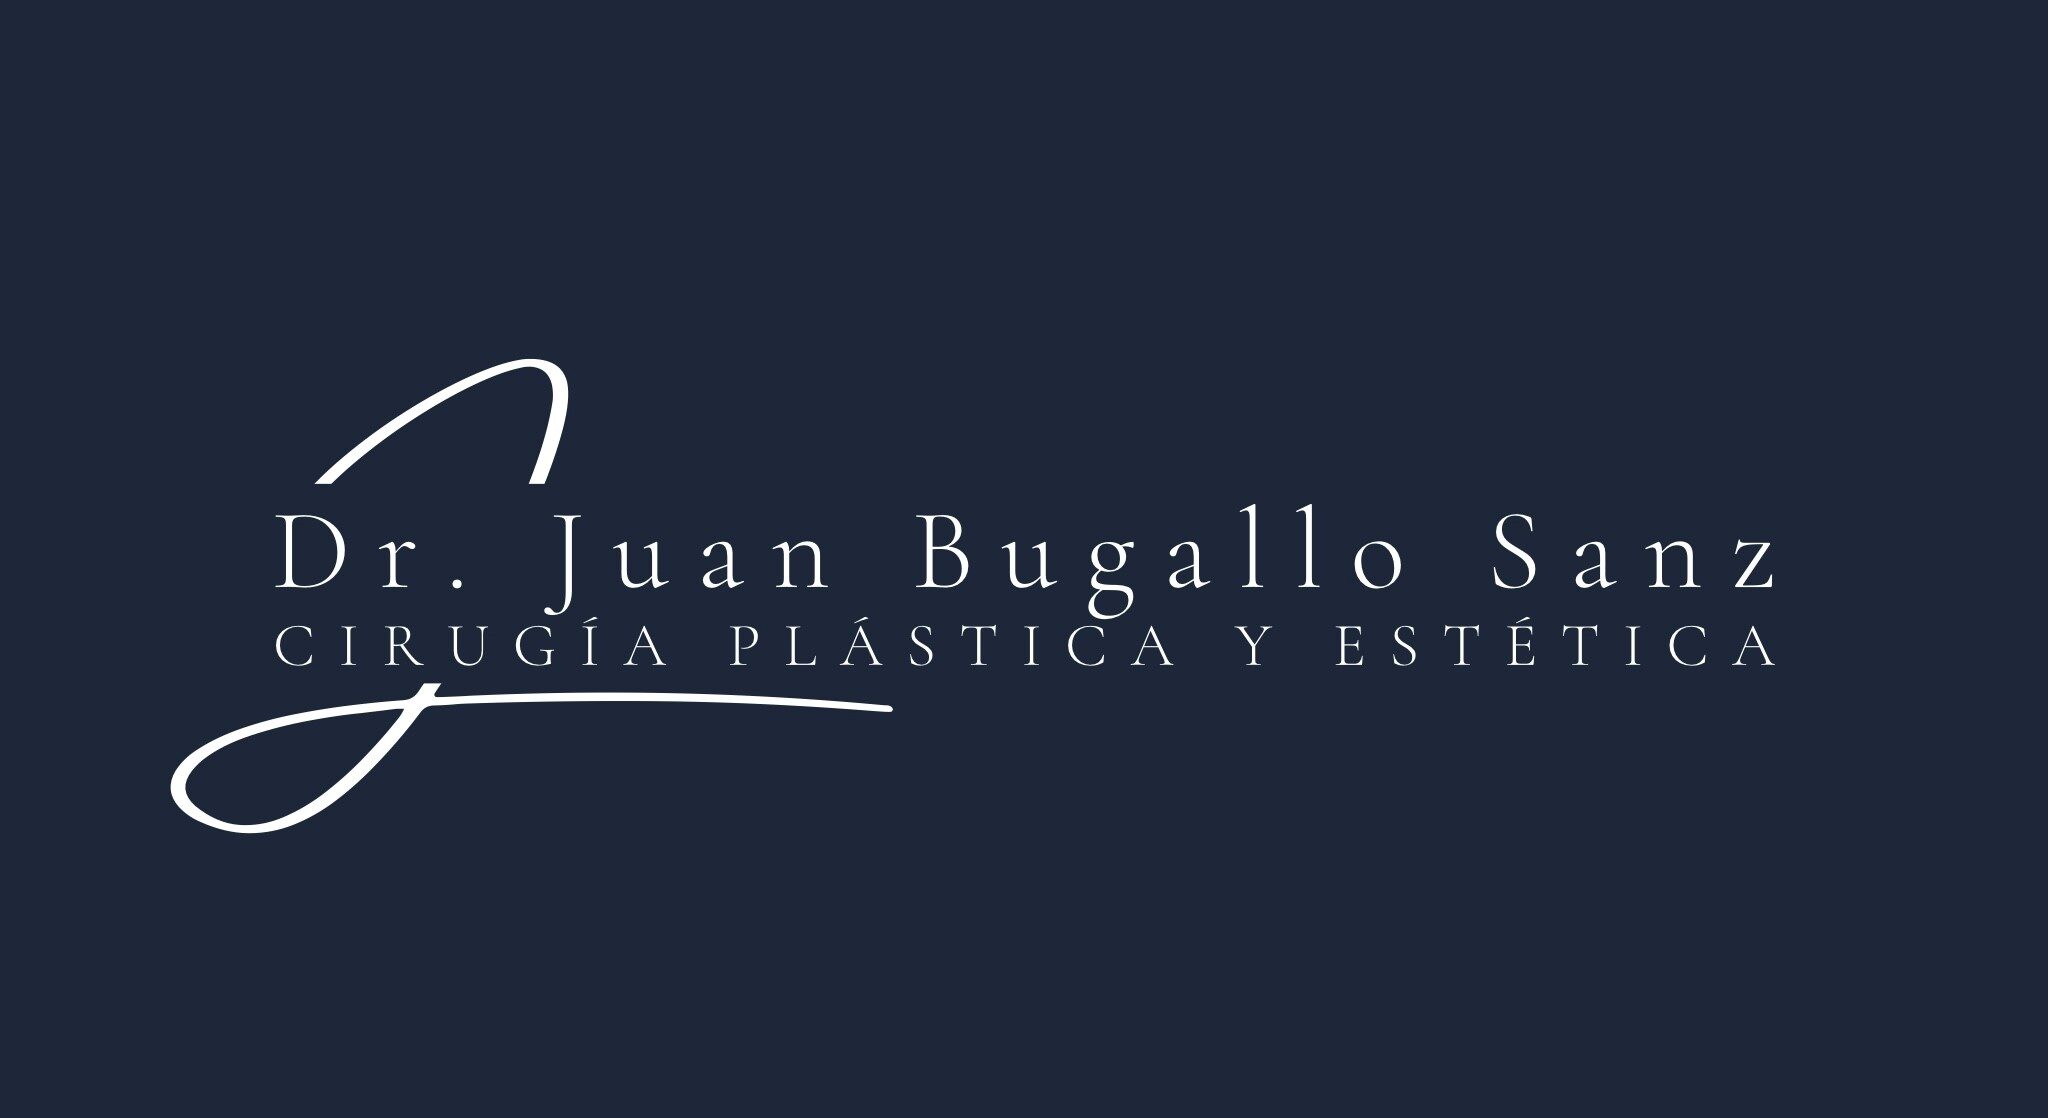 Dr. Juan Bugallo Sanz